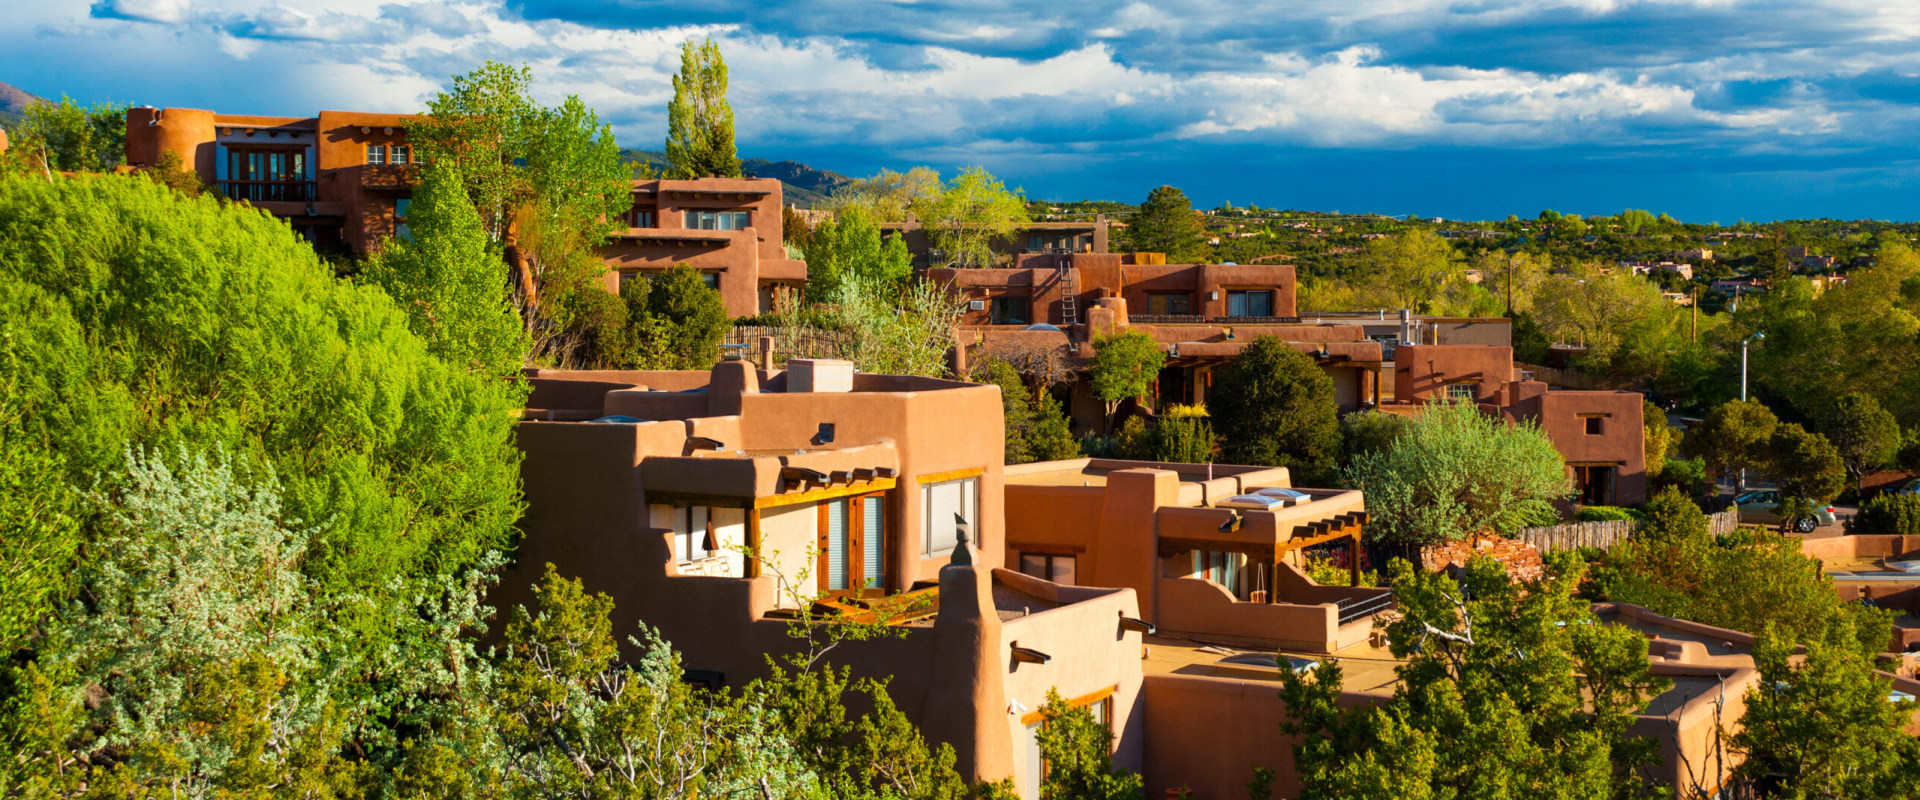 Factors Affecting the Santa Fe Housing Market